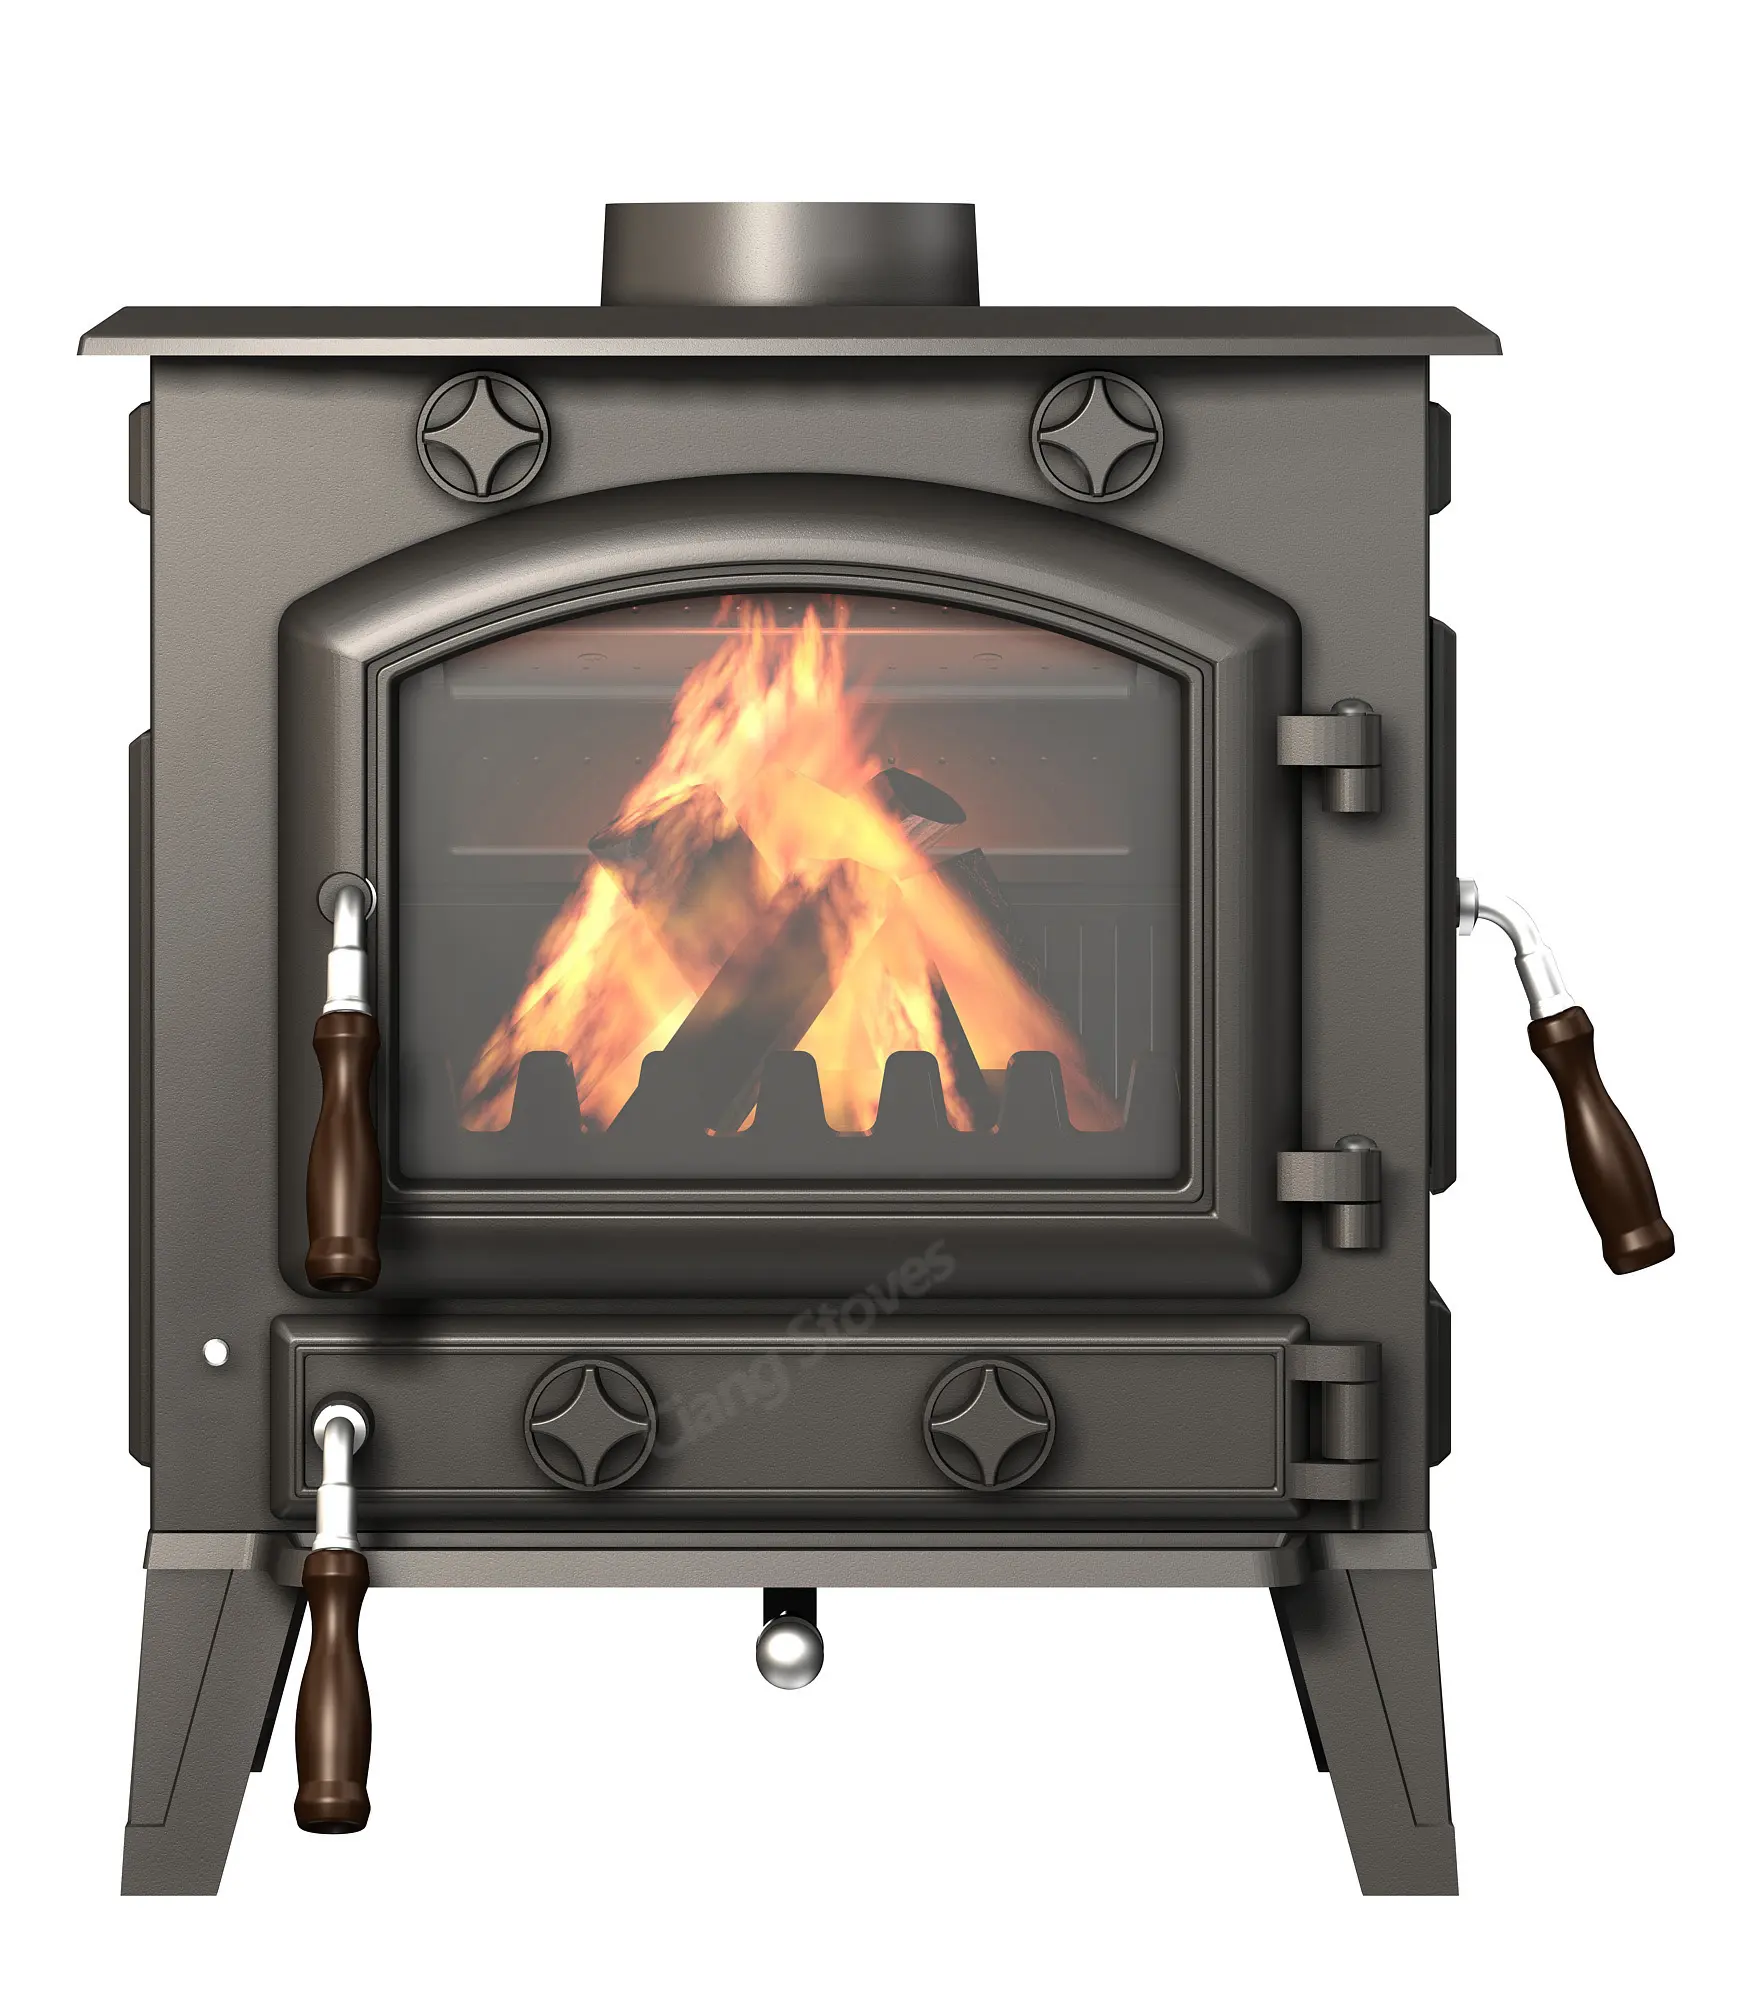 Chinese cast iron wood stove smokeless coal stove fireplace insert wood burning